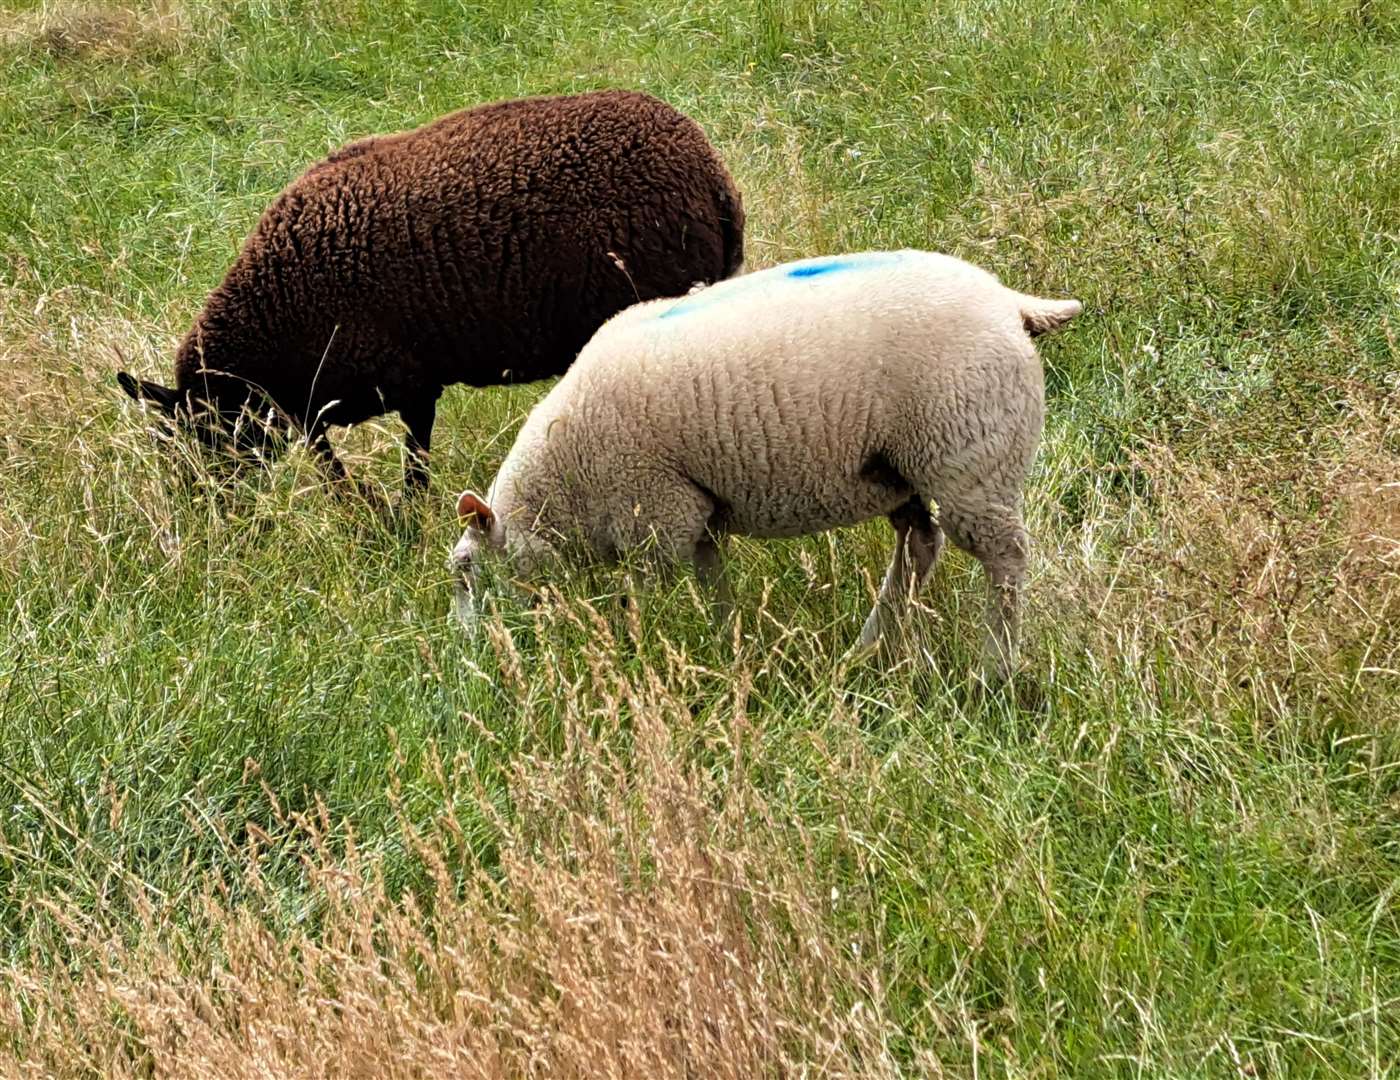 Around 70 sheep graze the land